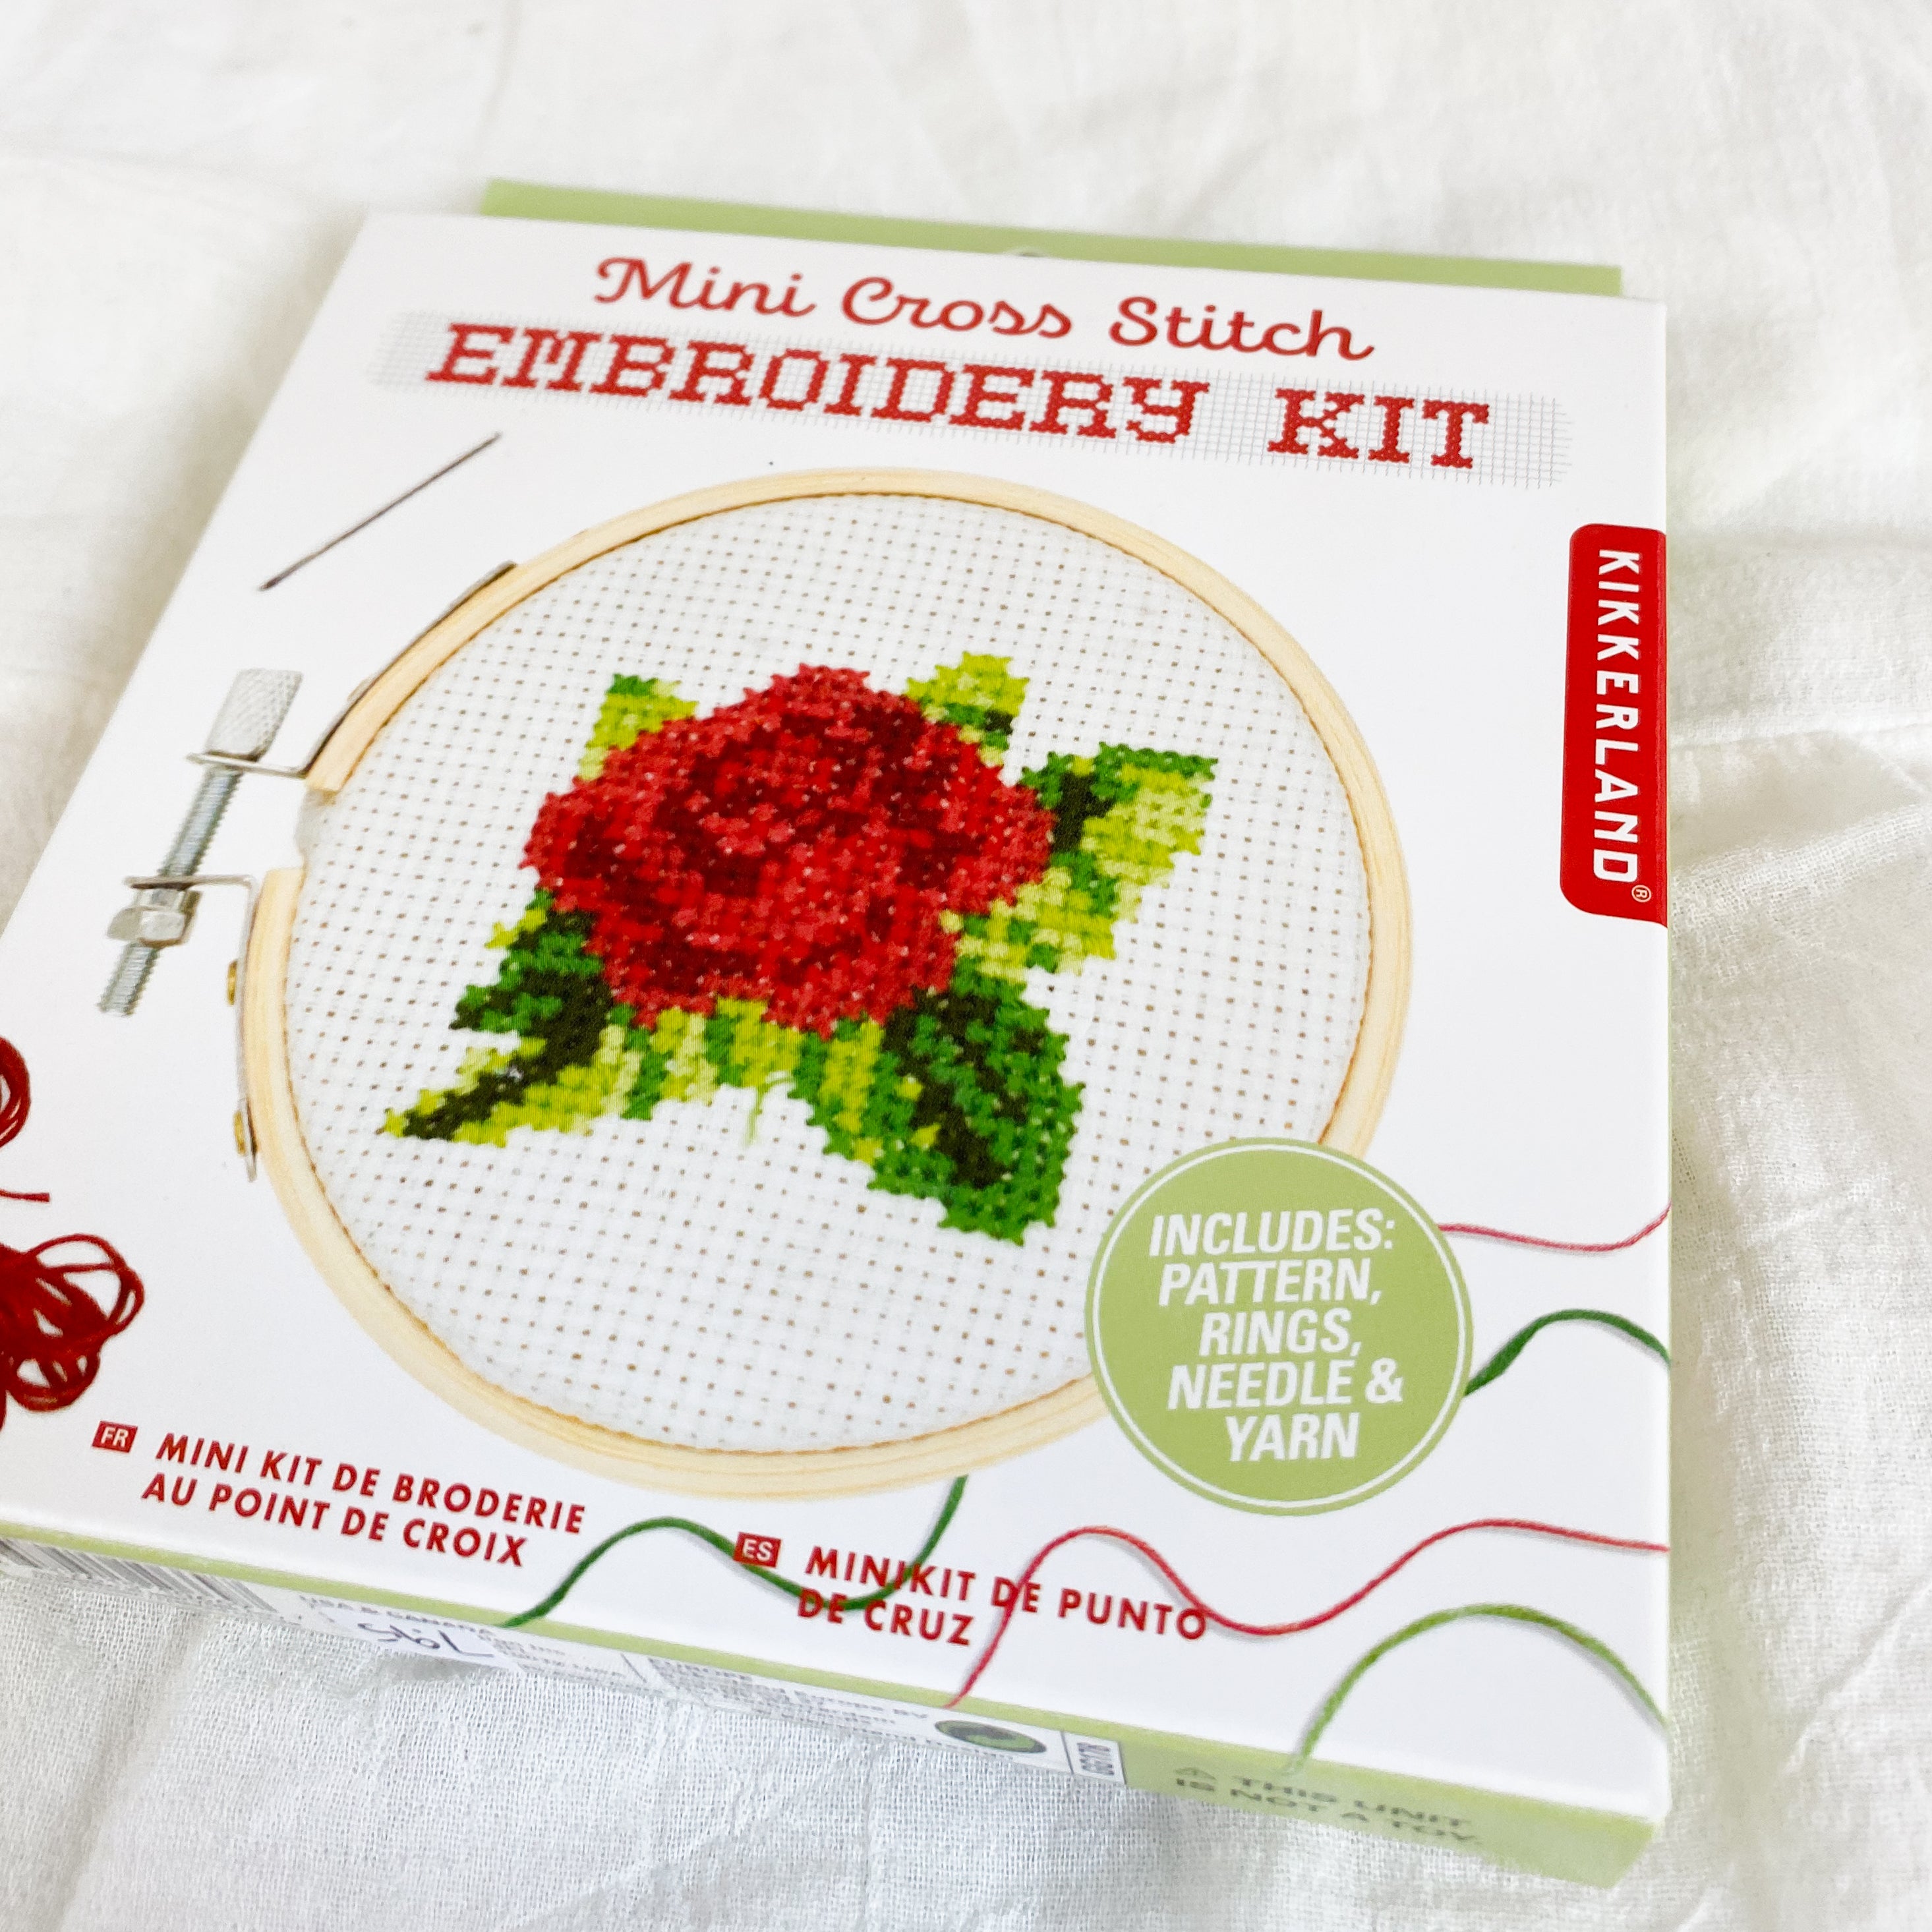 Mini Cross Stitch Embroidery Kit - Flower